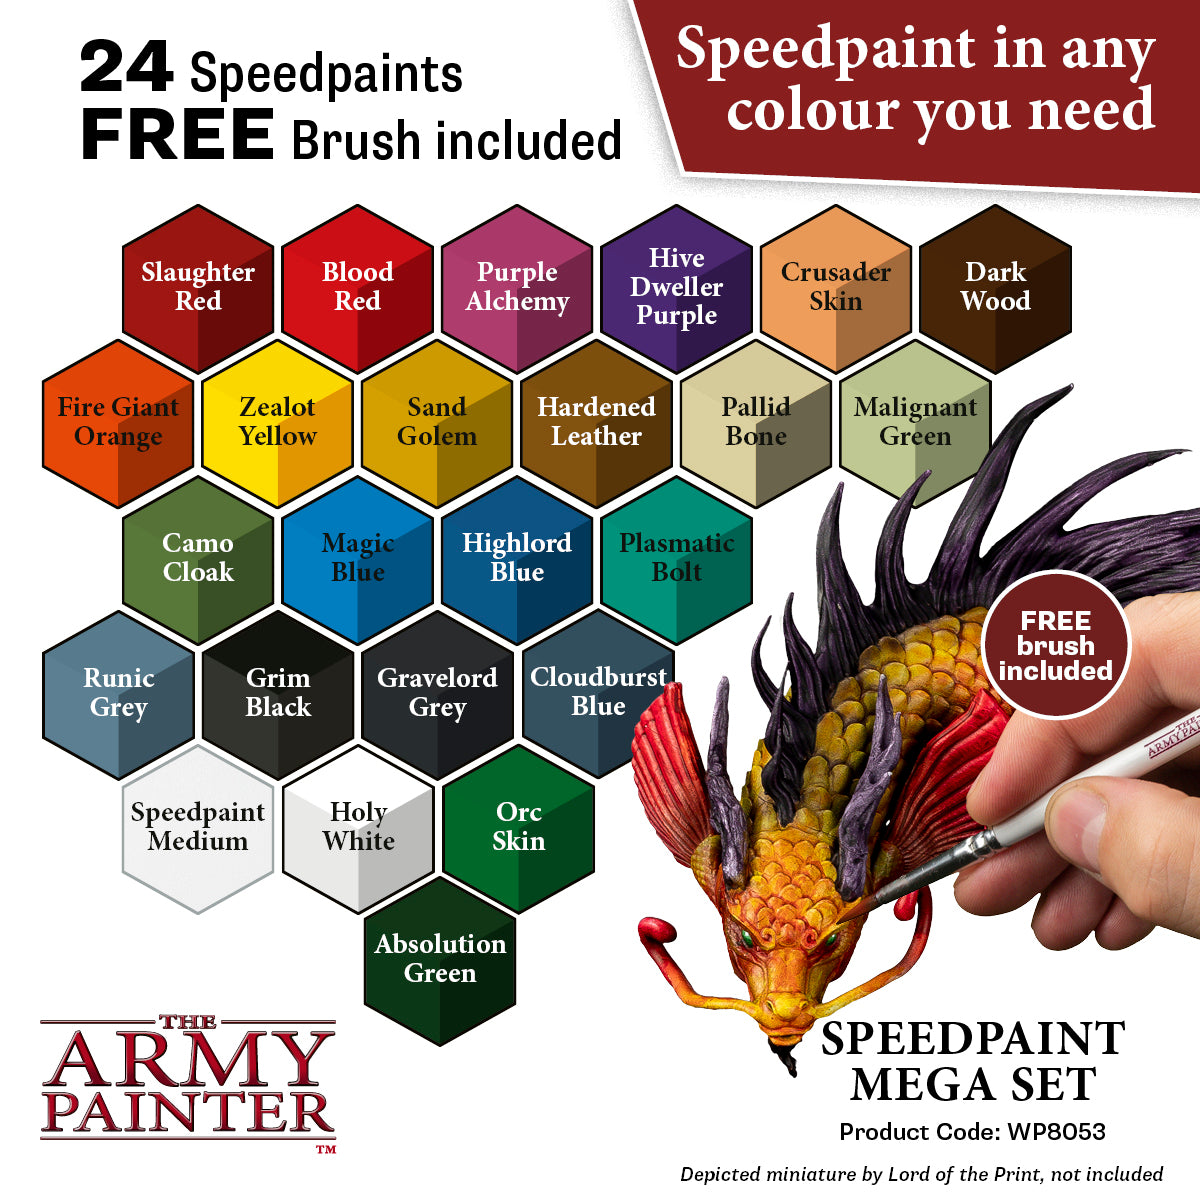 The Army Painter Speedpaint Medium